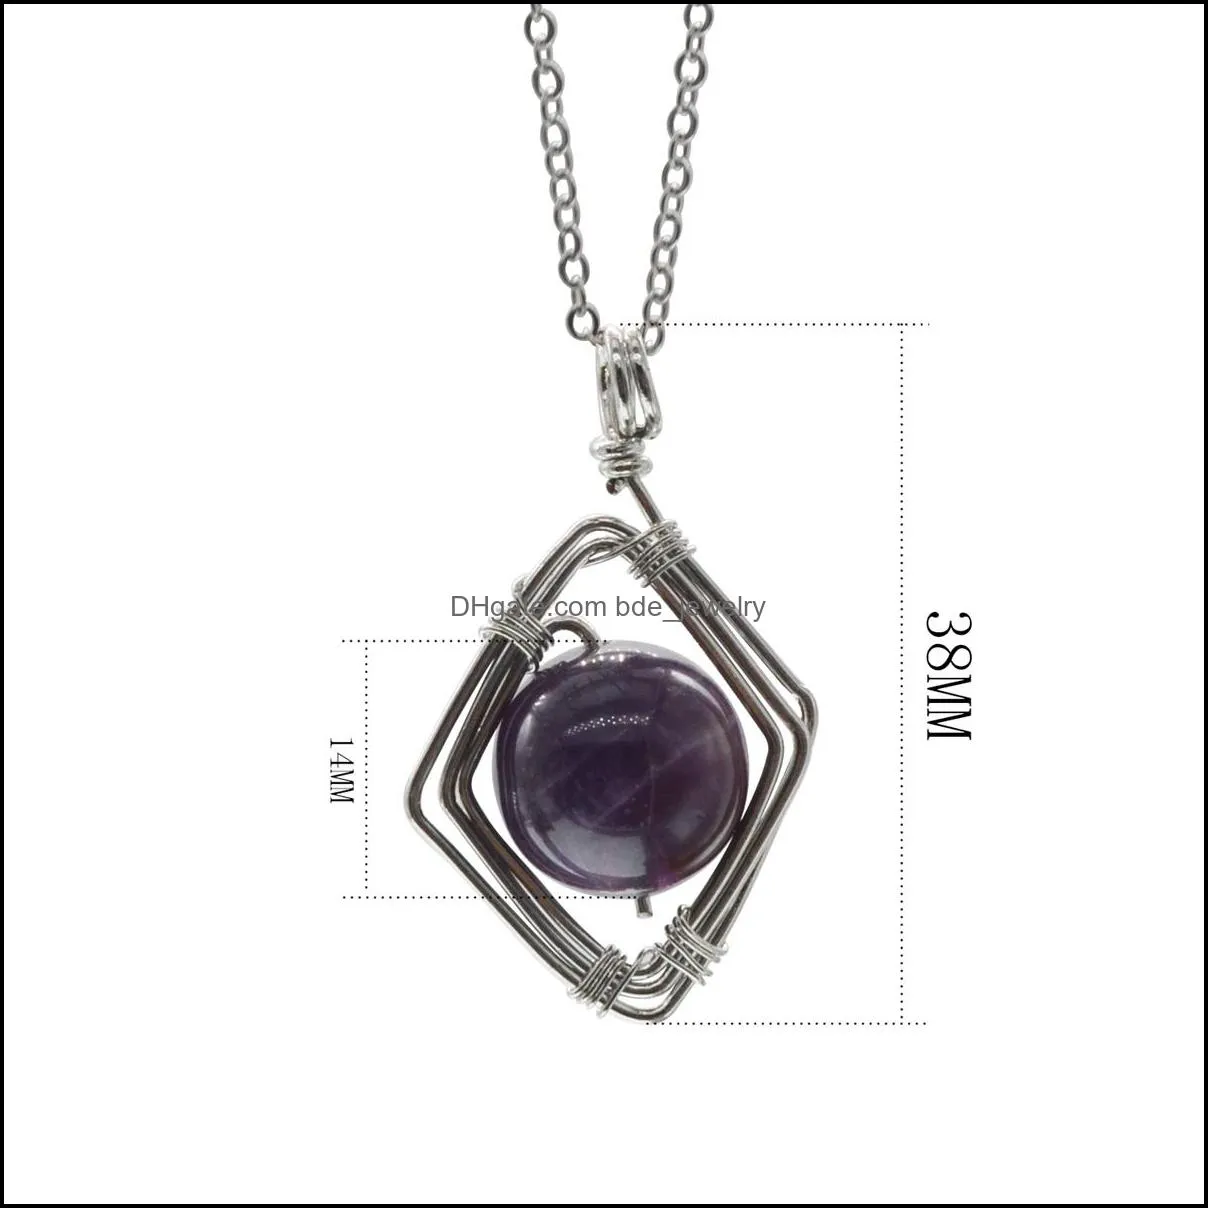 healing crystal ball gemstone necklace reiki jewelry natural 14mm bead round stone wire diamond pendant